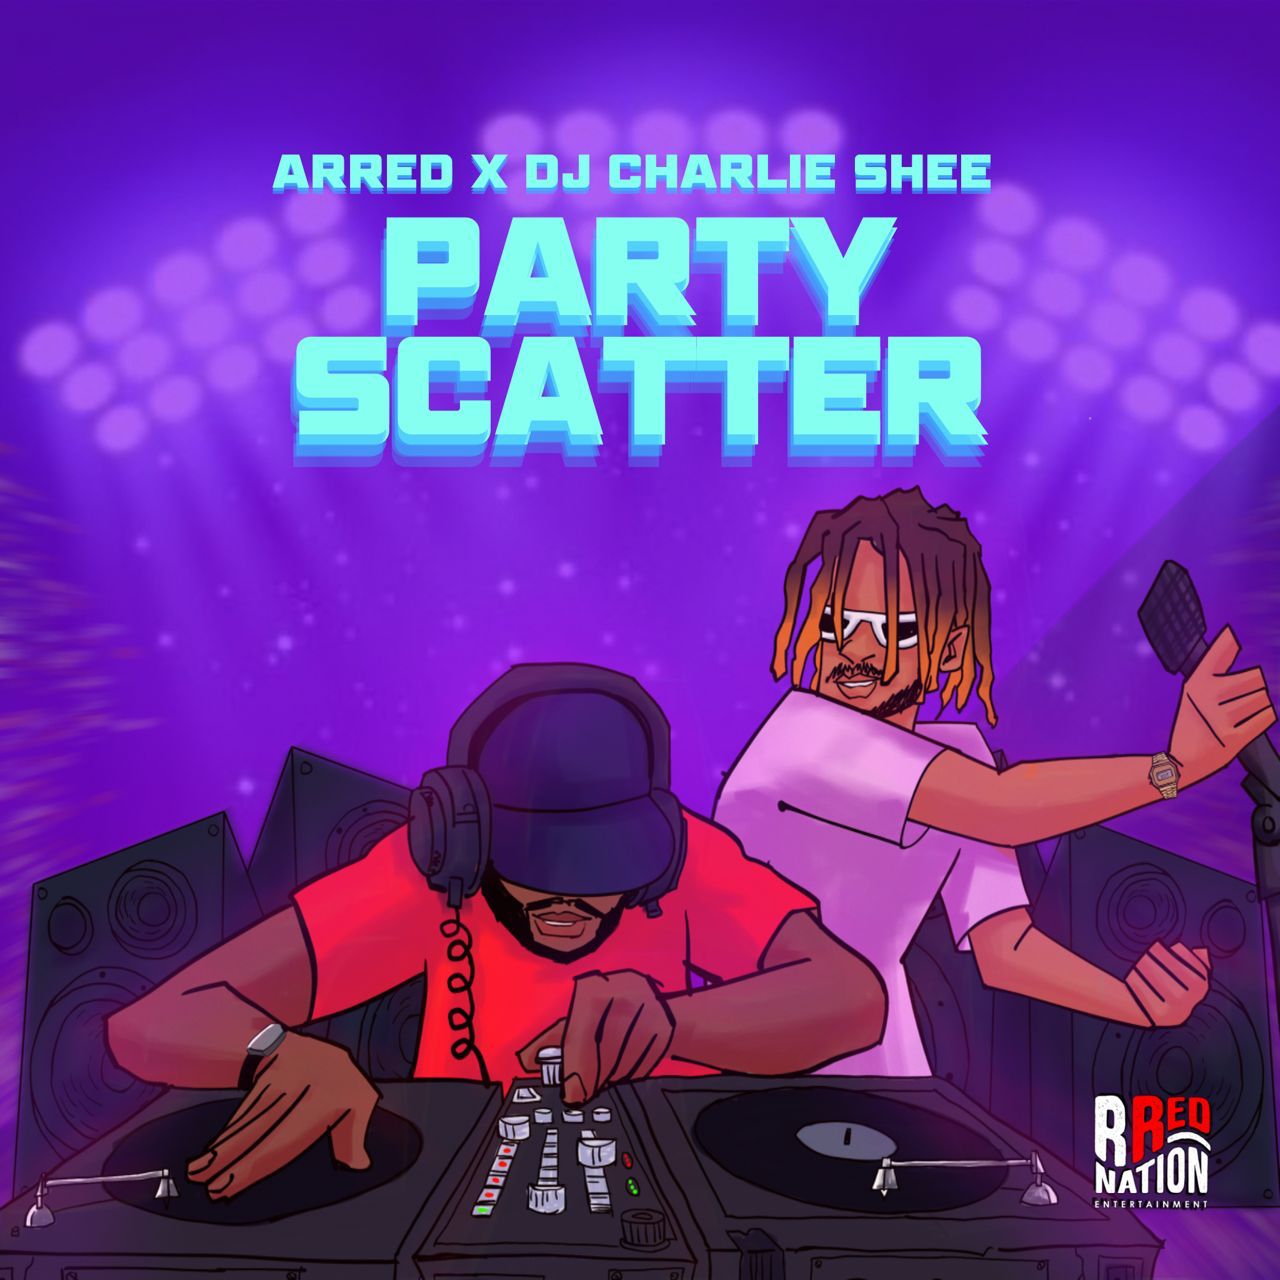 DJ Charlie Shee Arred Party Scatter